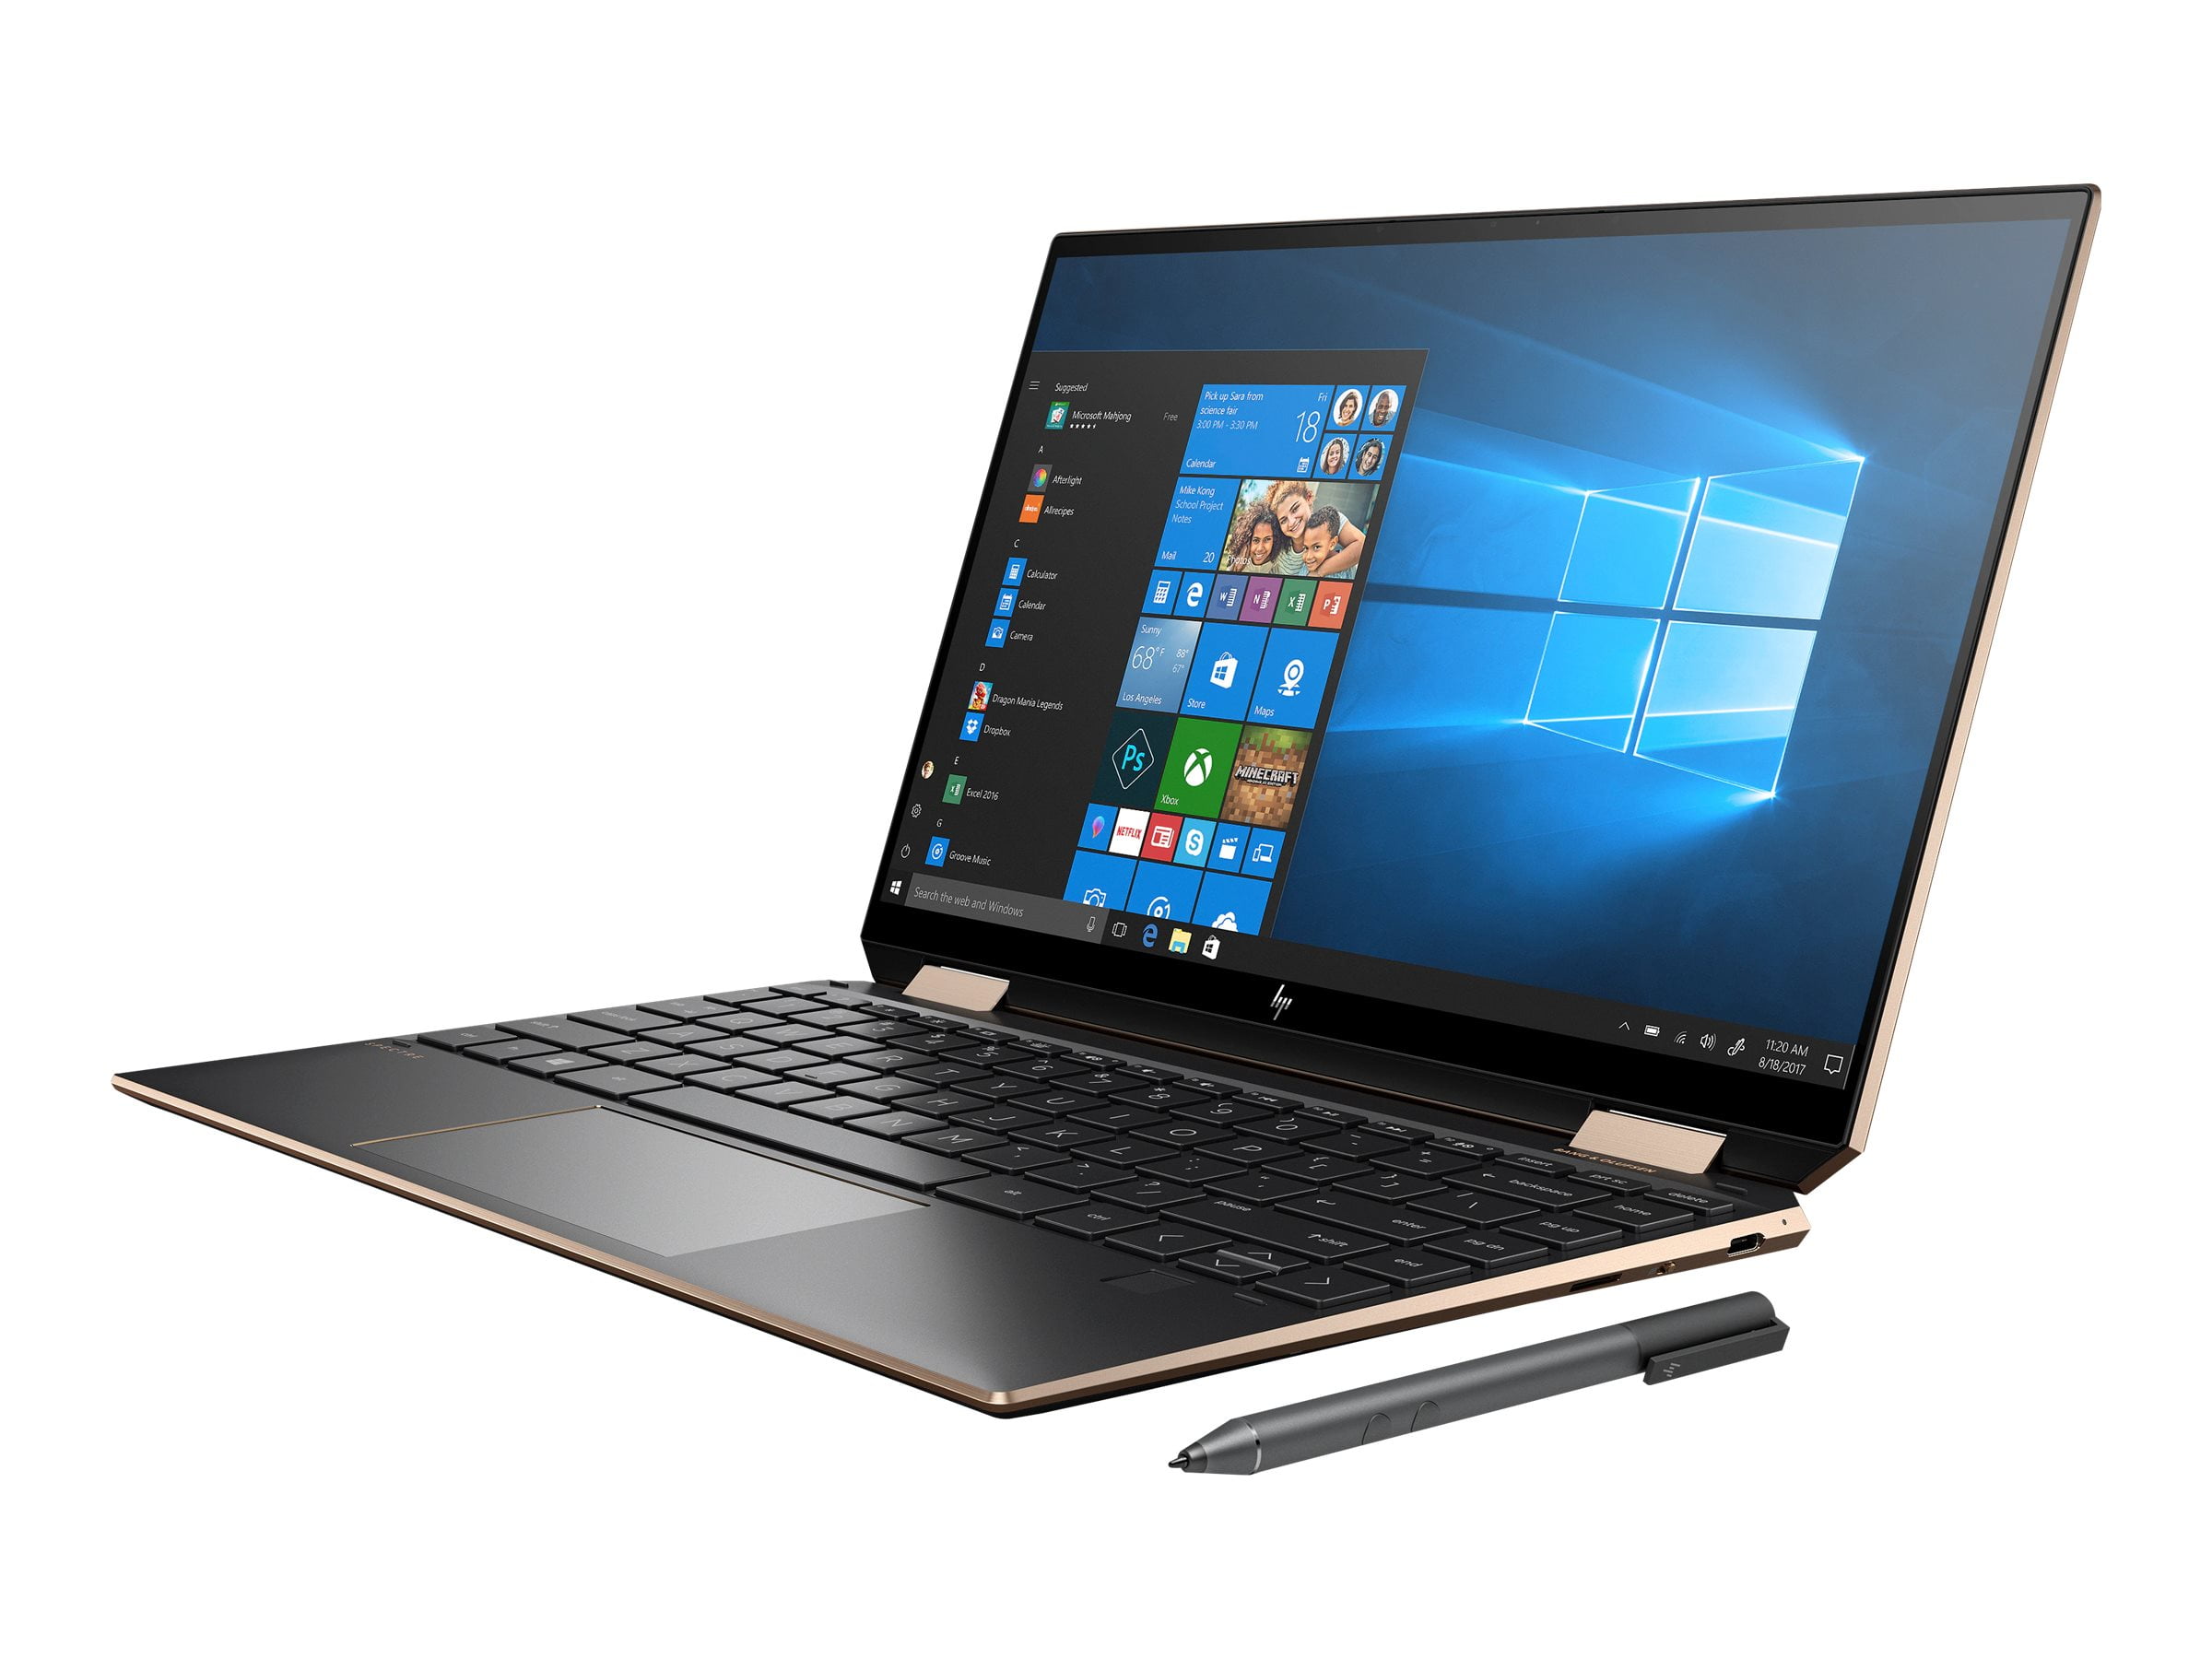 HP Spectre x360 Laptop 13-aw0023dx - Flip design - Intel Core i7 1065G7 /  1.3 GHz - Win 10 Home 64-bit - Iris Plus Graphics - 16 GB RAM - 1 TB SSD 